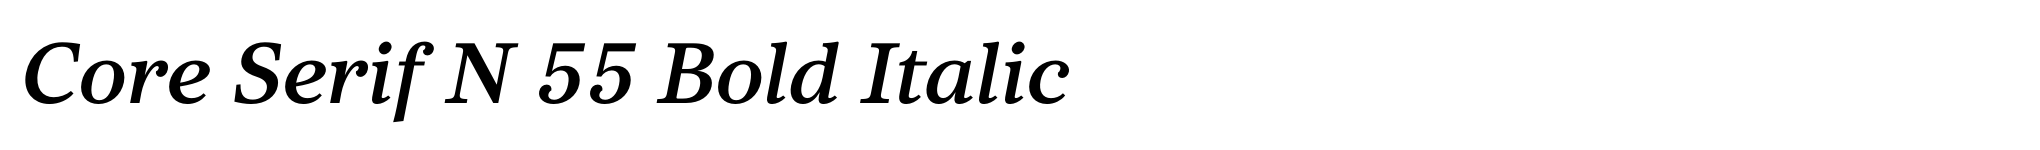 Core Serif N 55 Bold Italic image